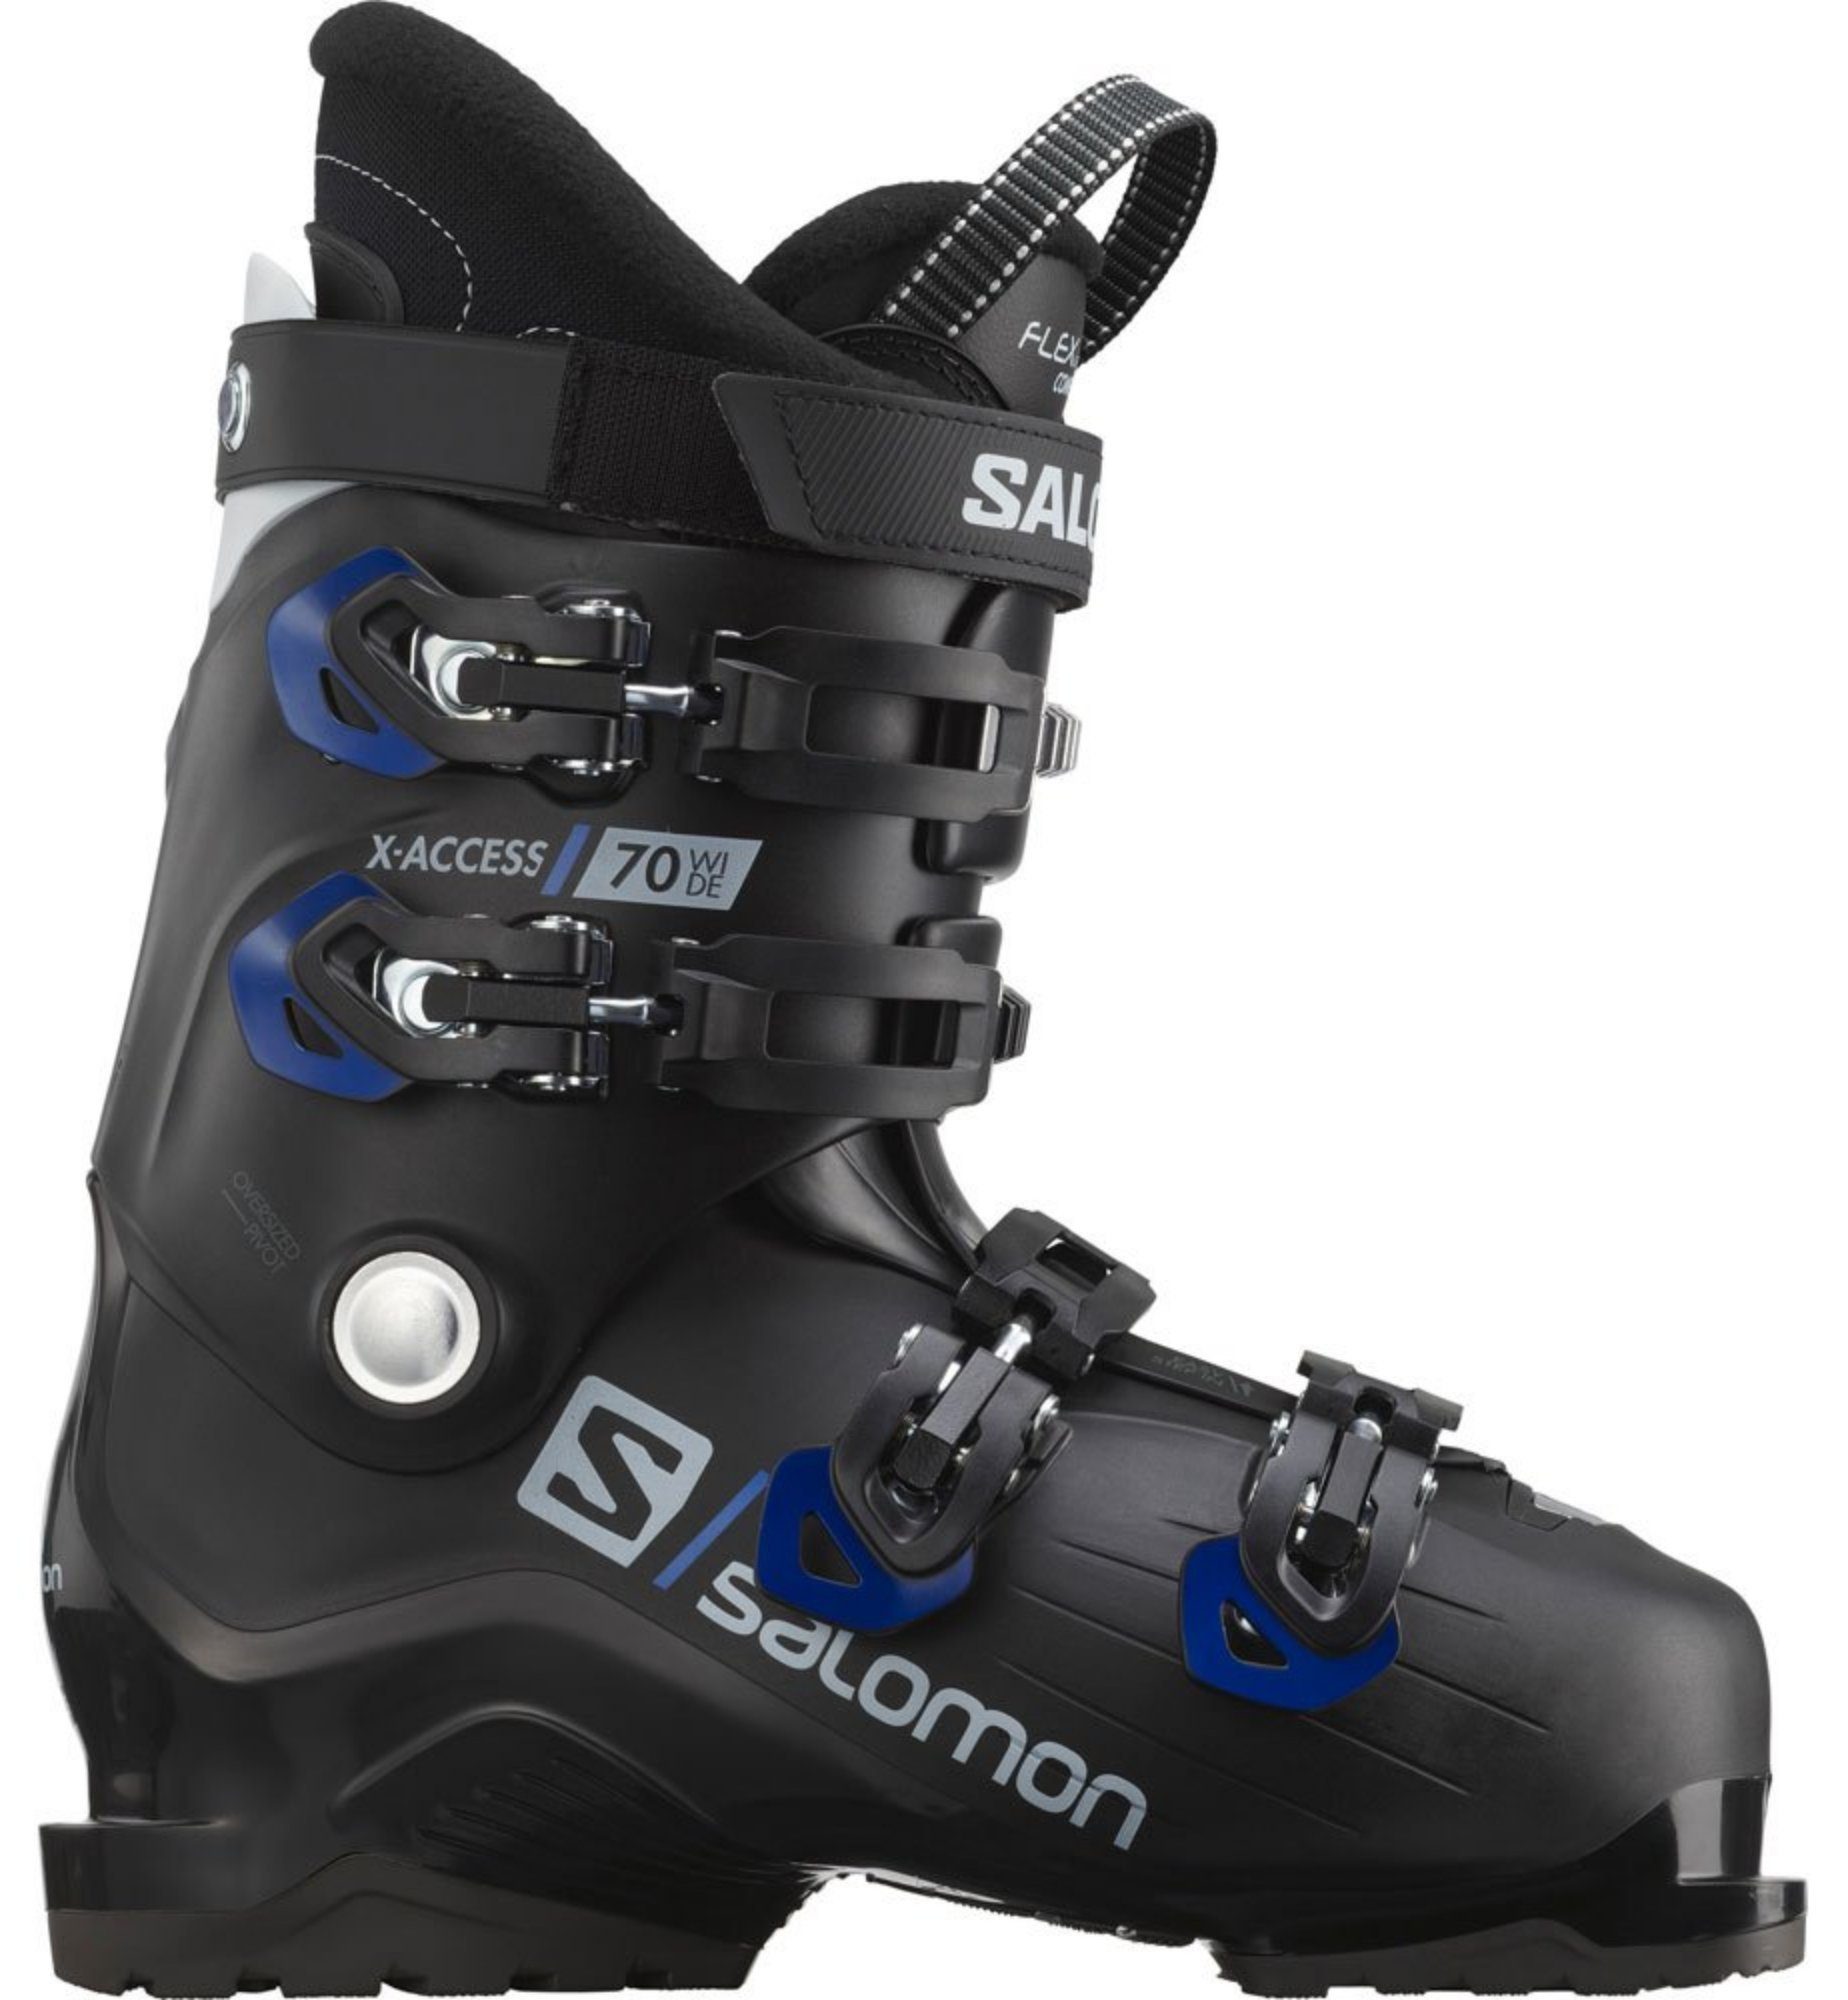 Salomon ALP. BOOTS X ACCESS 70 wide Bk/Race B/Wh Skischuh